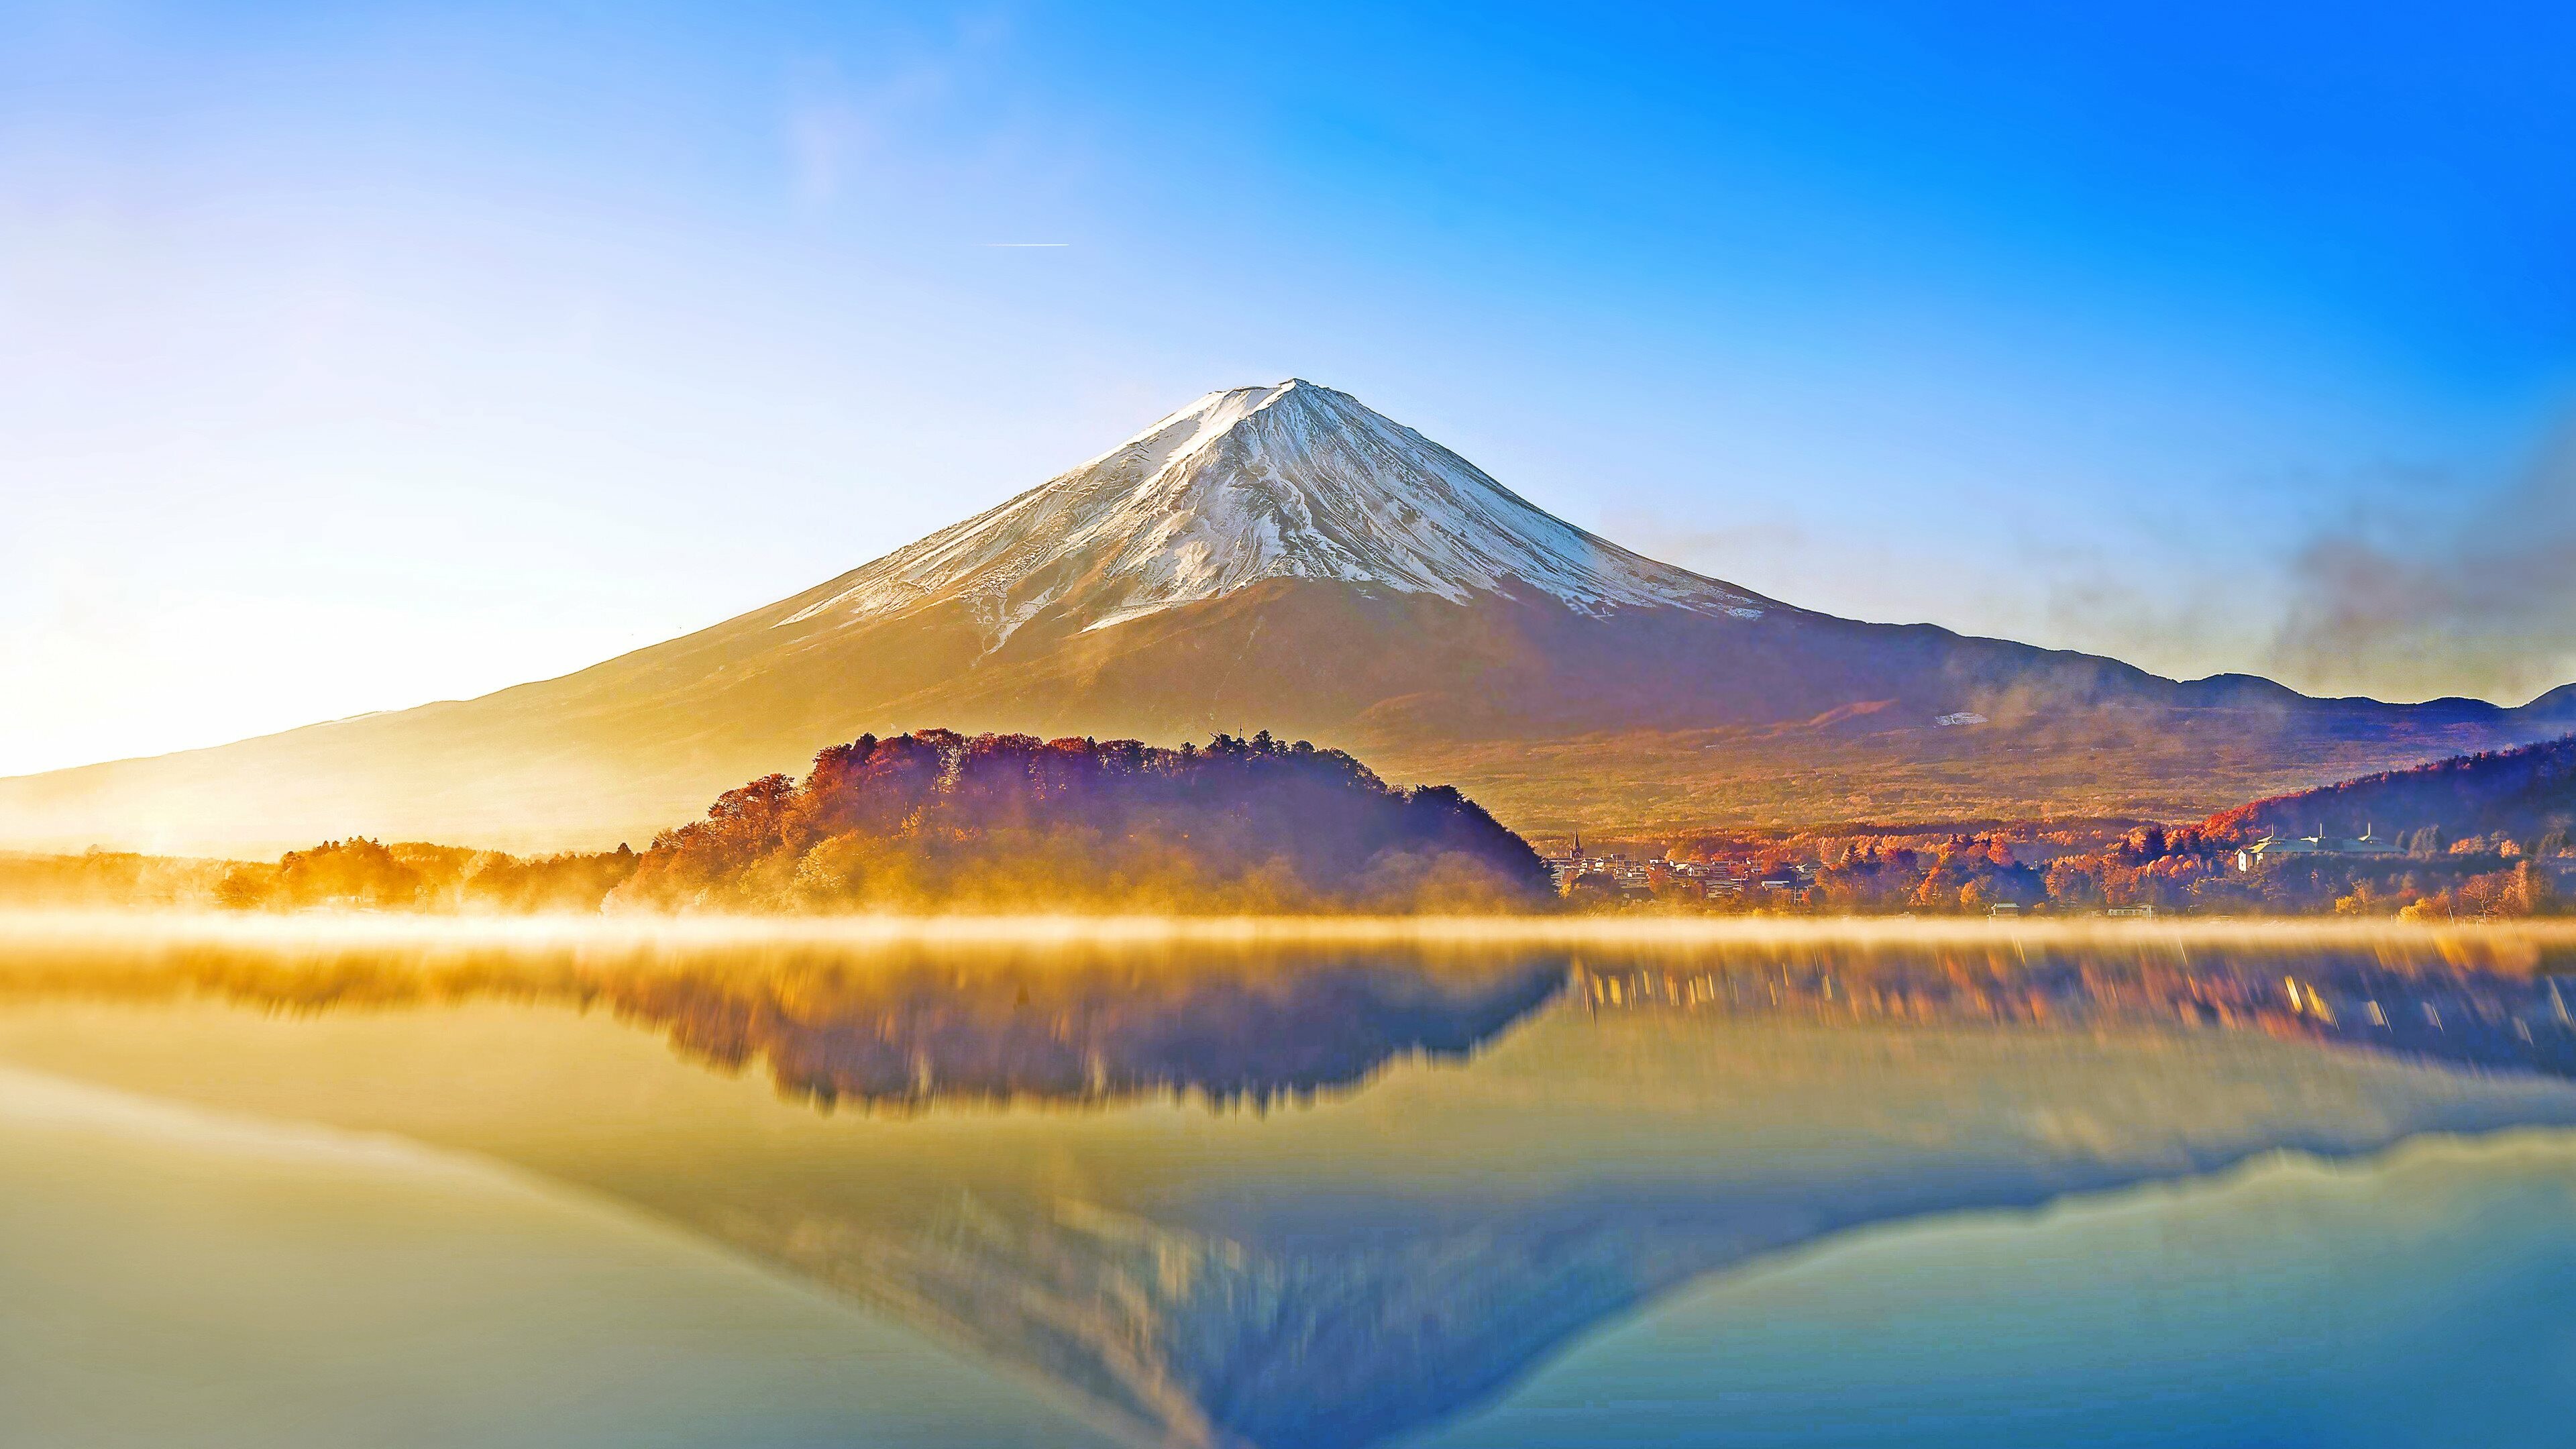 Japan: Mount Fuji, Stratovolcano, Morning at the Honshu island. 3840x2160 4K Background.